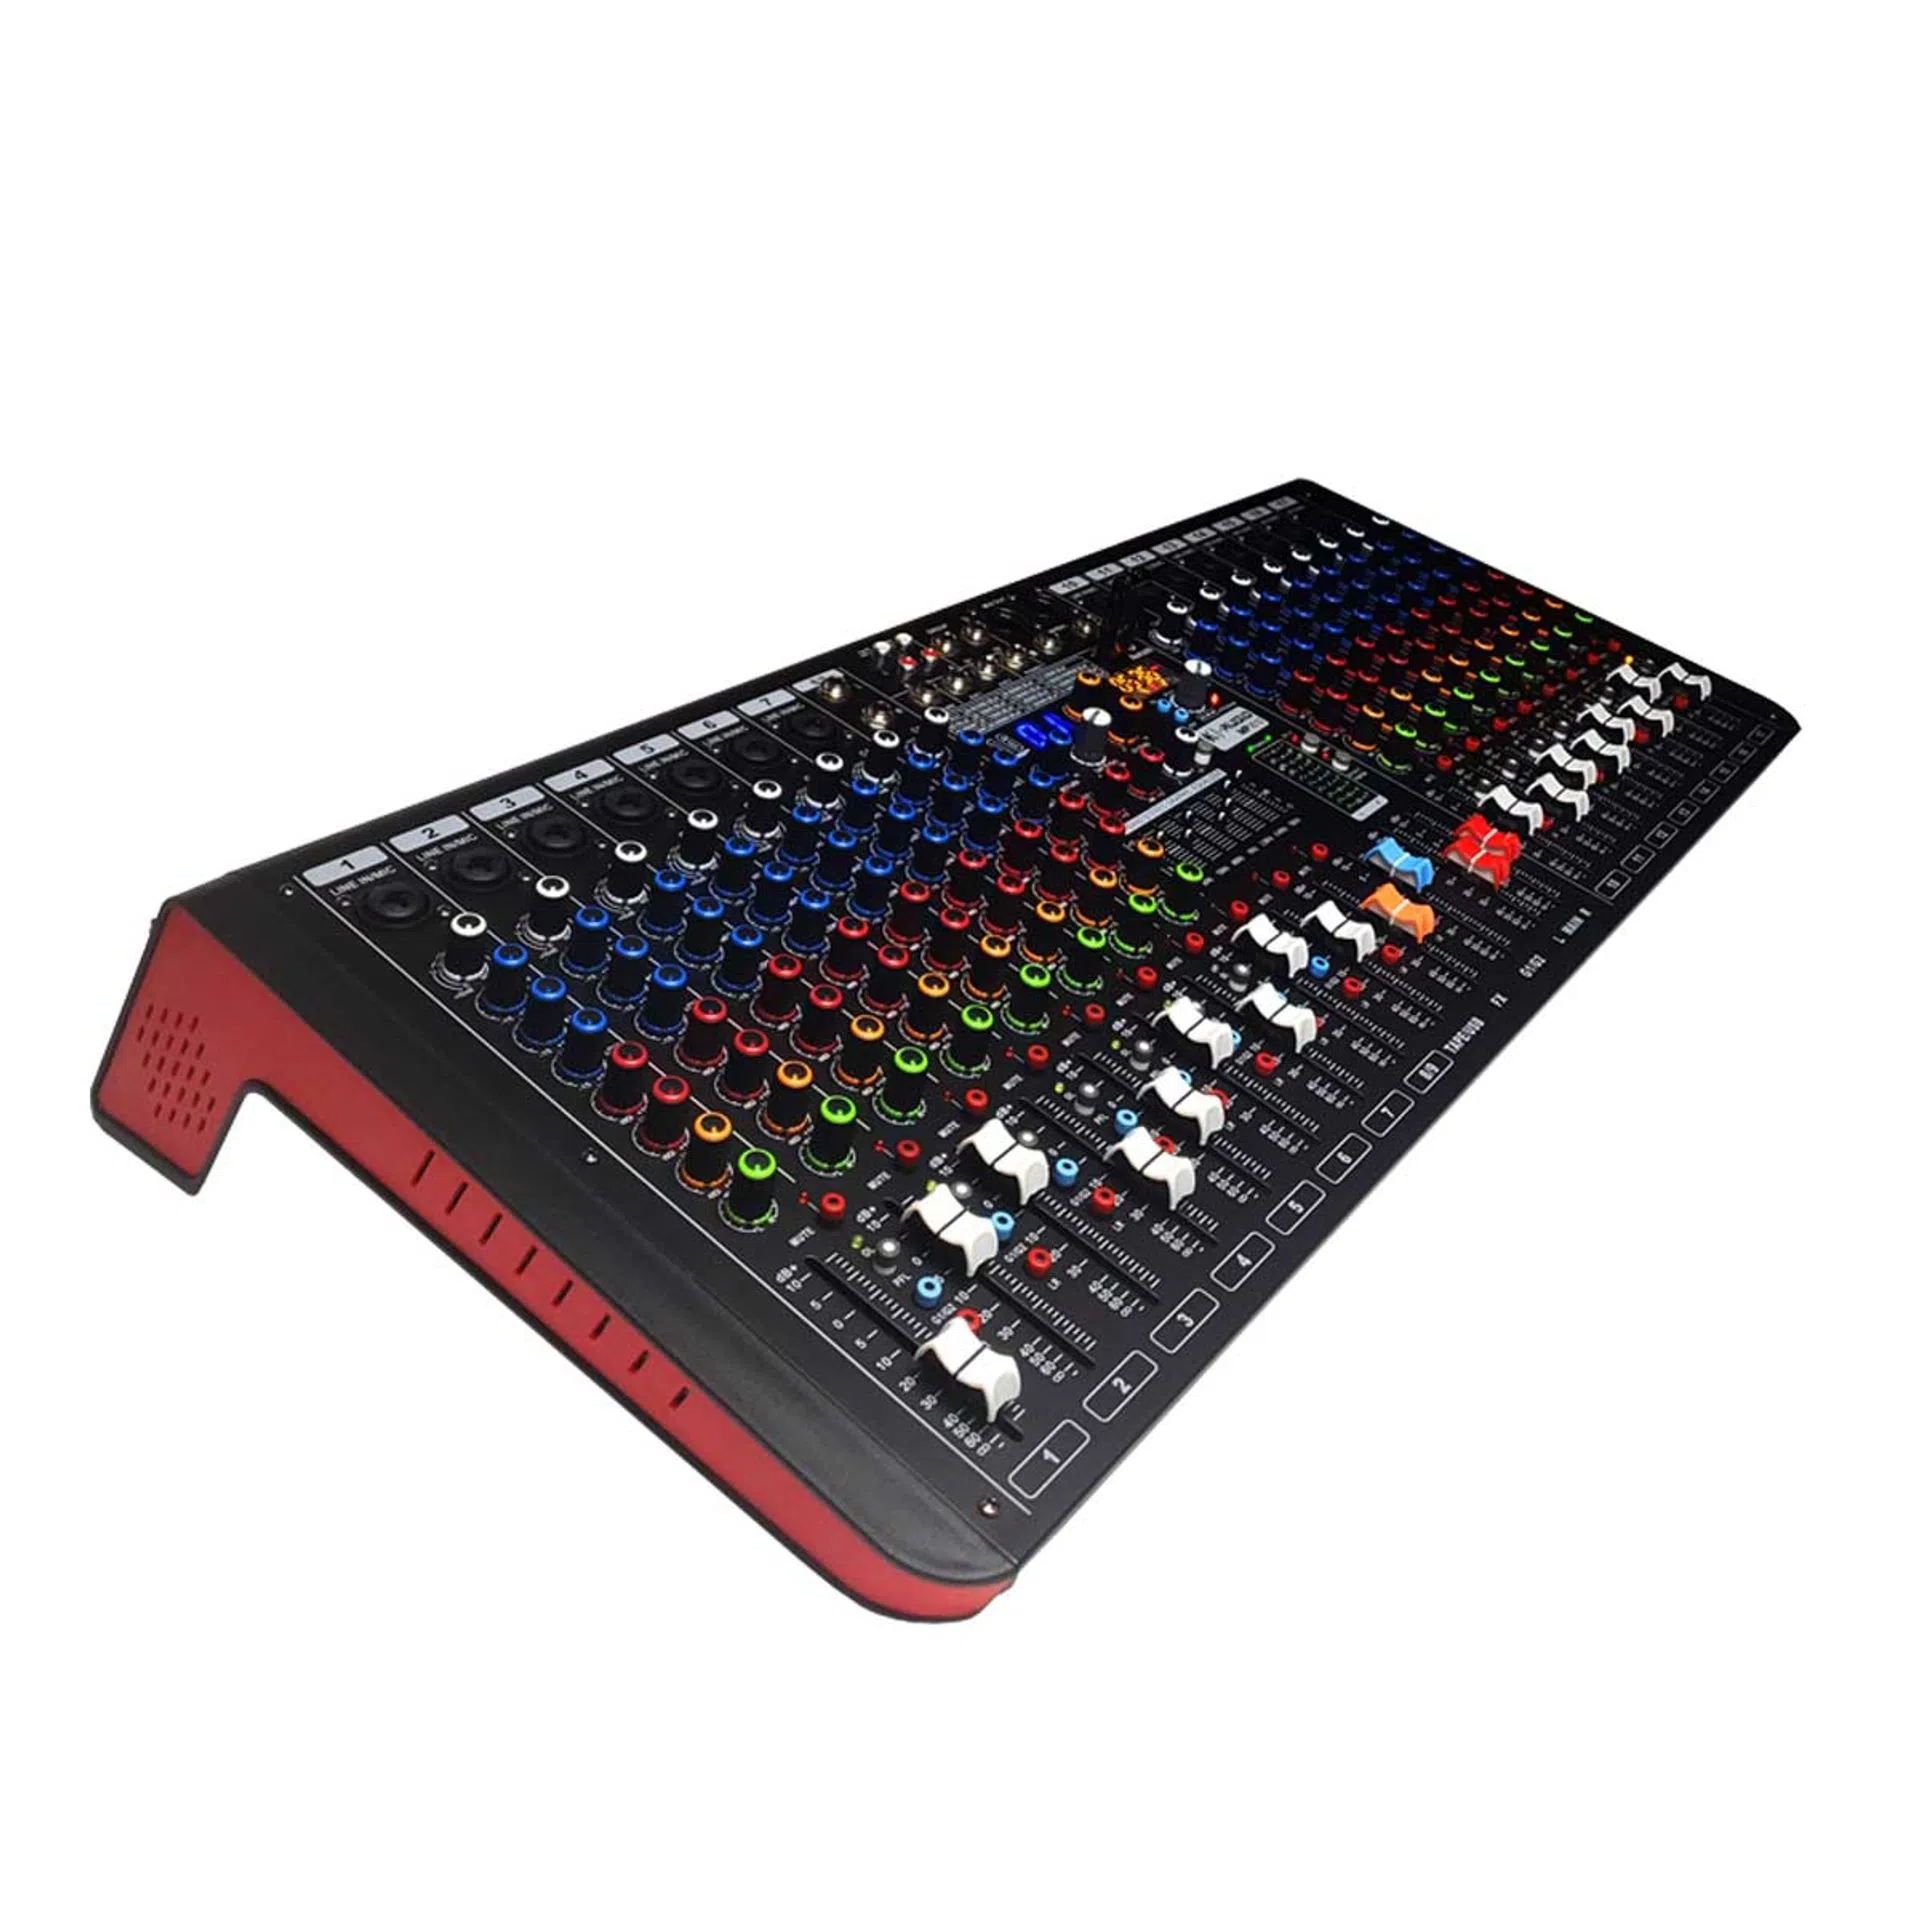 Mixer K-Áudio 16 canais 2 aux MP-1610